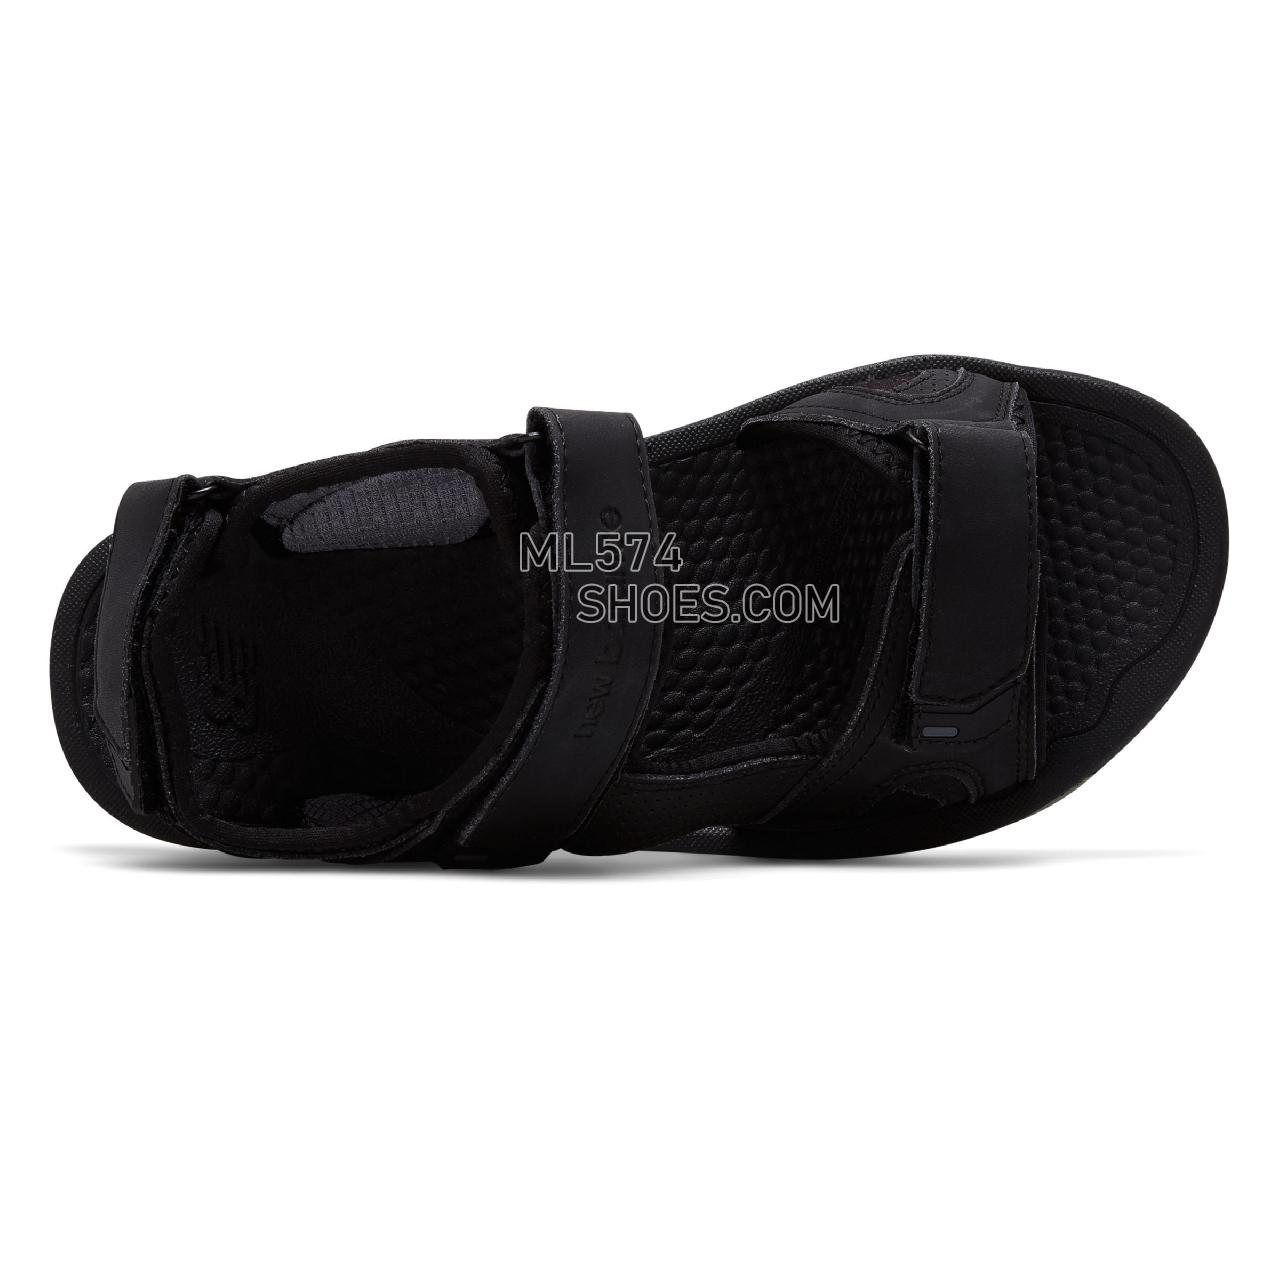 New Balance PureAlign Recharge Sandal - Men's 2080 - Sandals Black - M2080BK